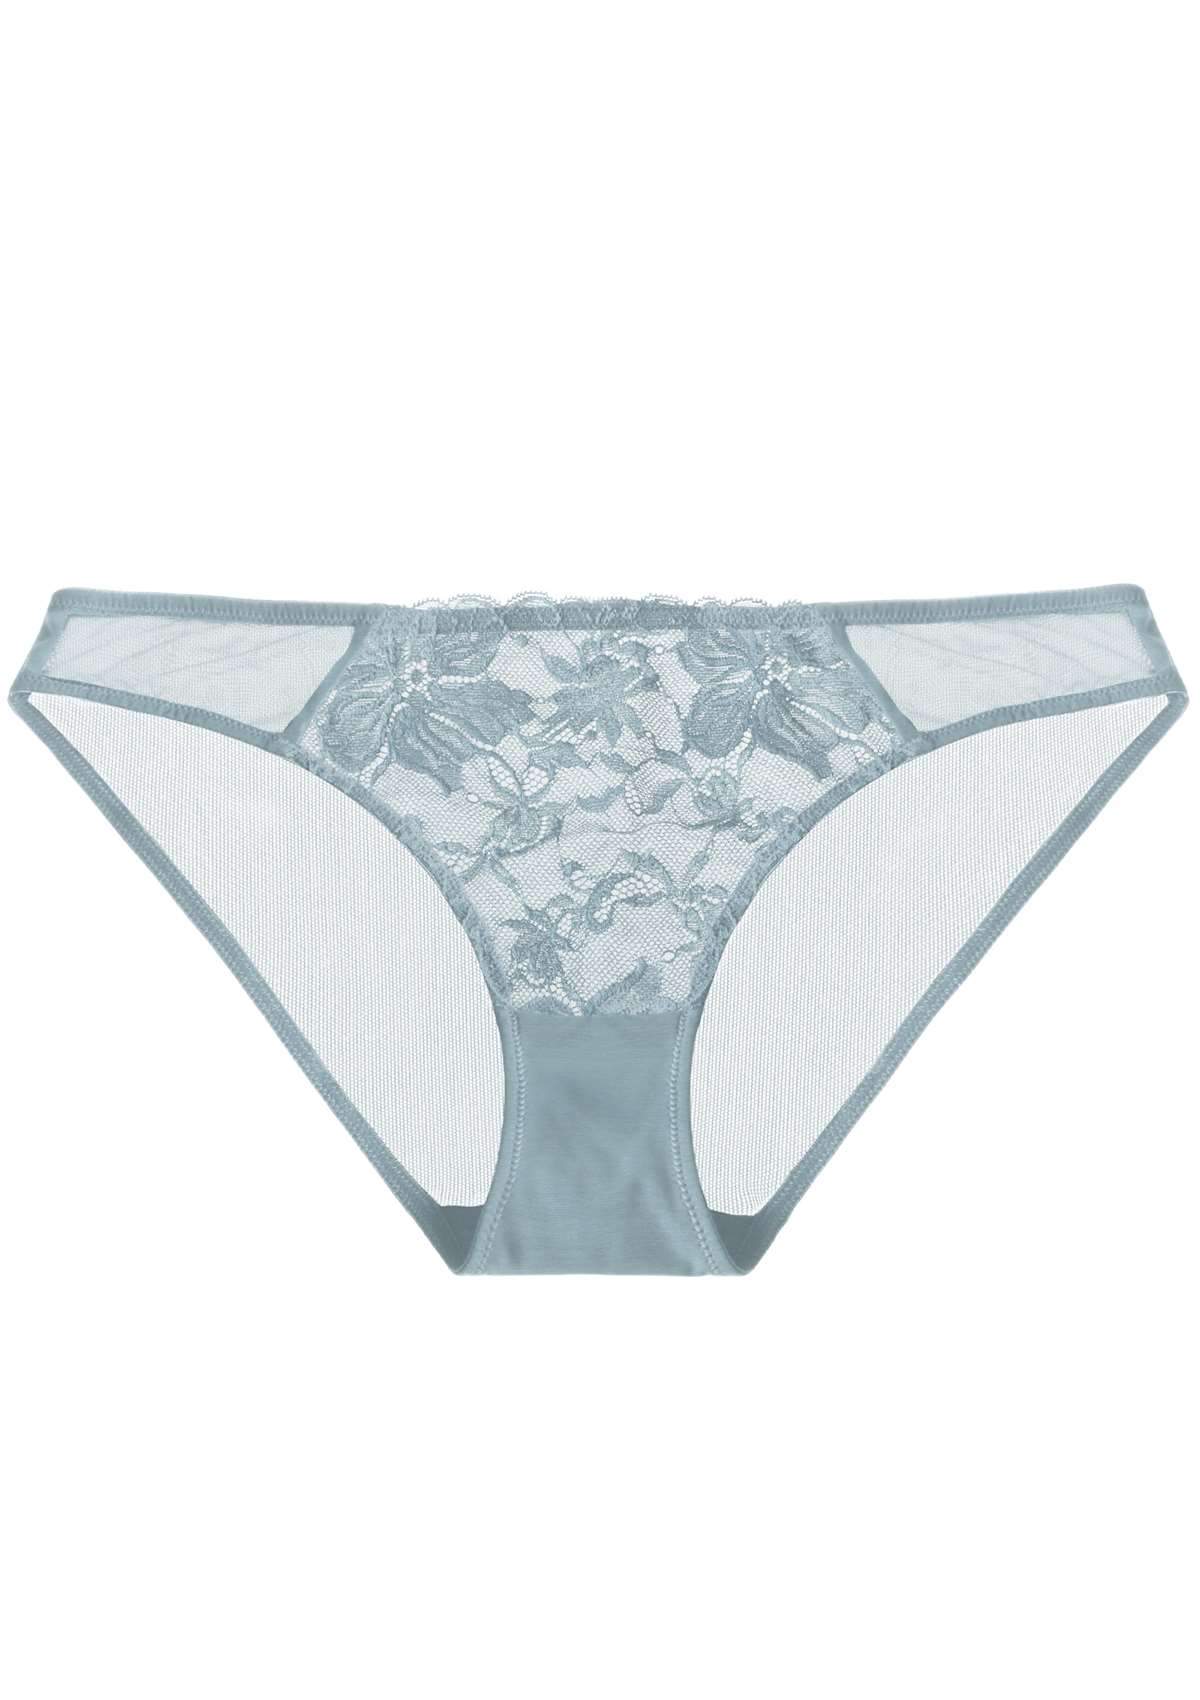 HSIA Breathable Sexy Feminine Lace Mesh Bikini Underwear - S / Dark Blue